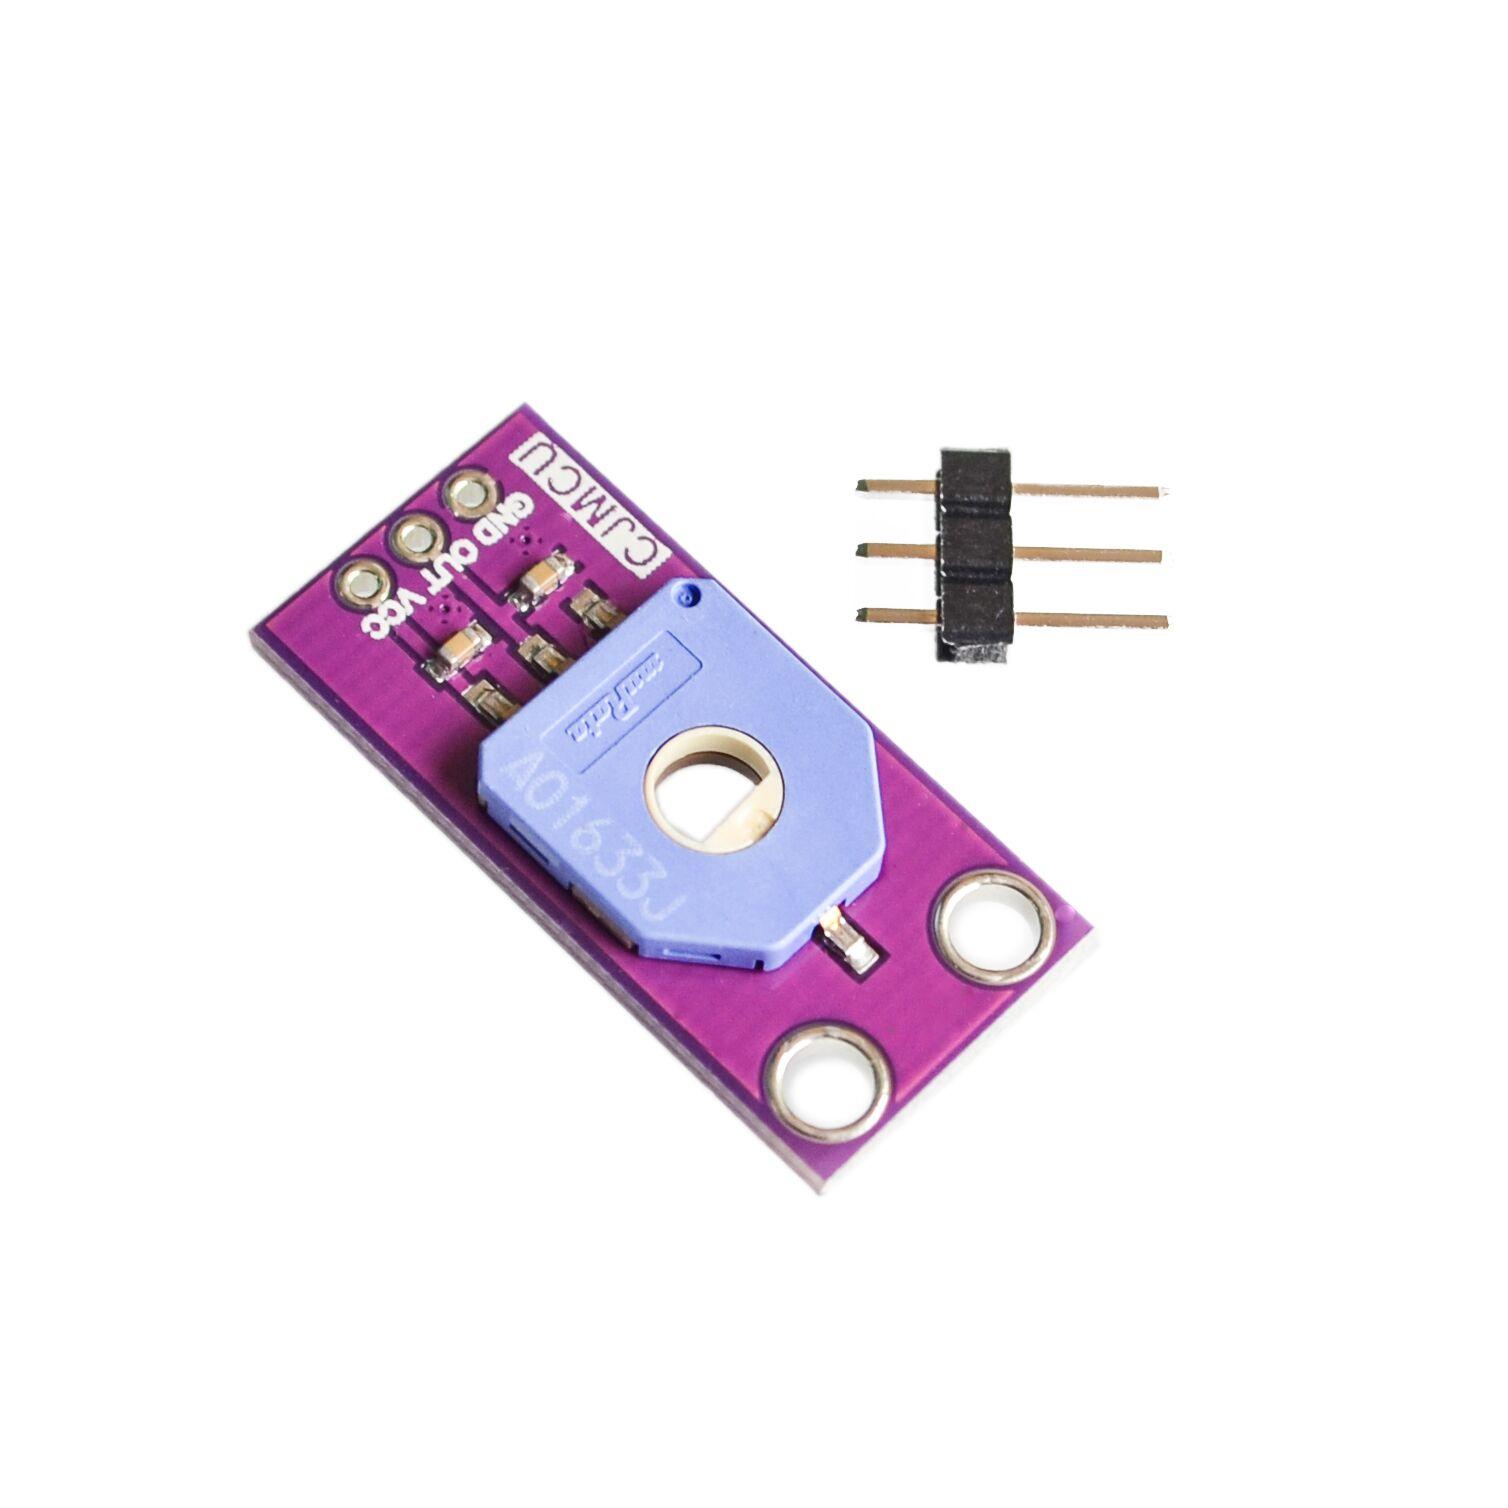 103 Rotary Angle Sensor SMD Dust-Proof Angle Sensing Potentiometer Module SV01A103AEA01R00 For